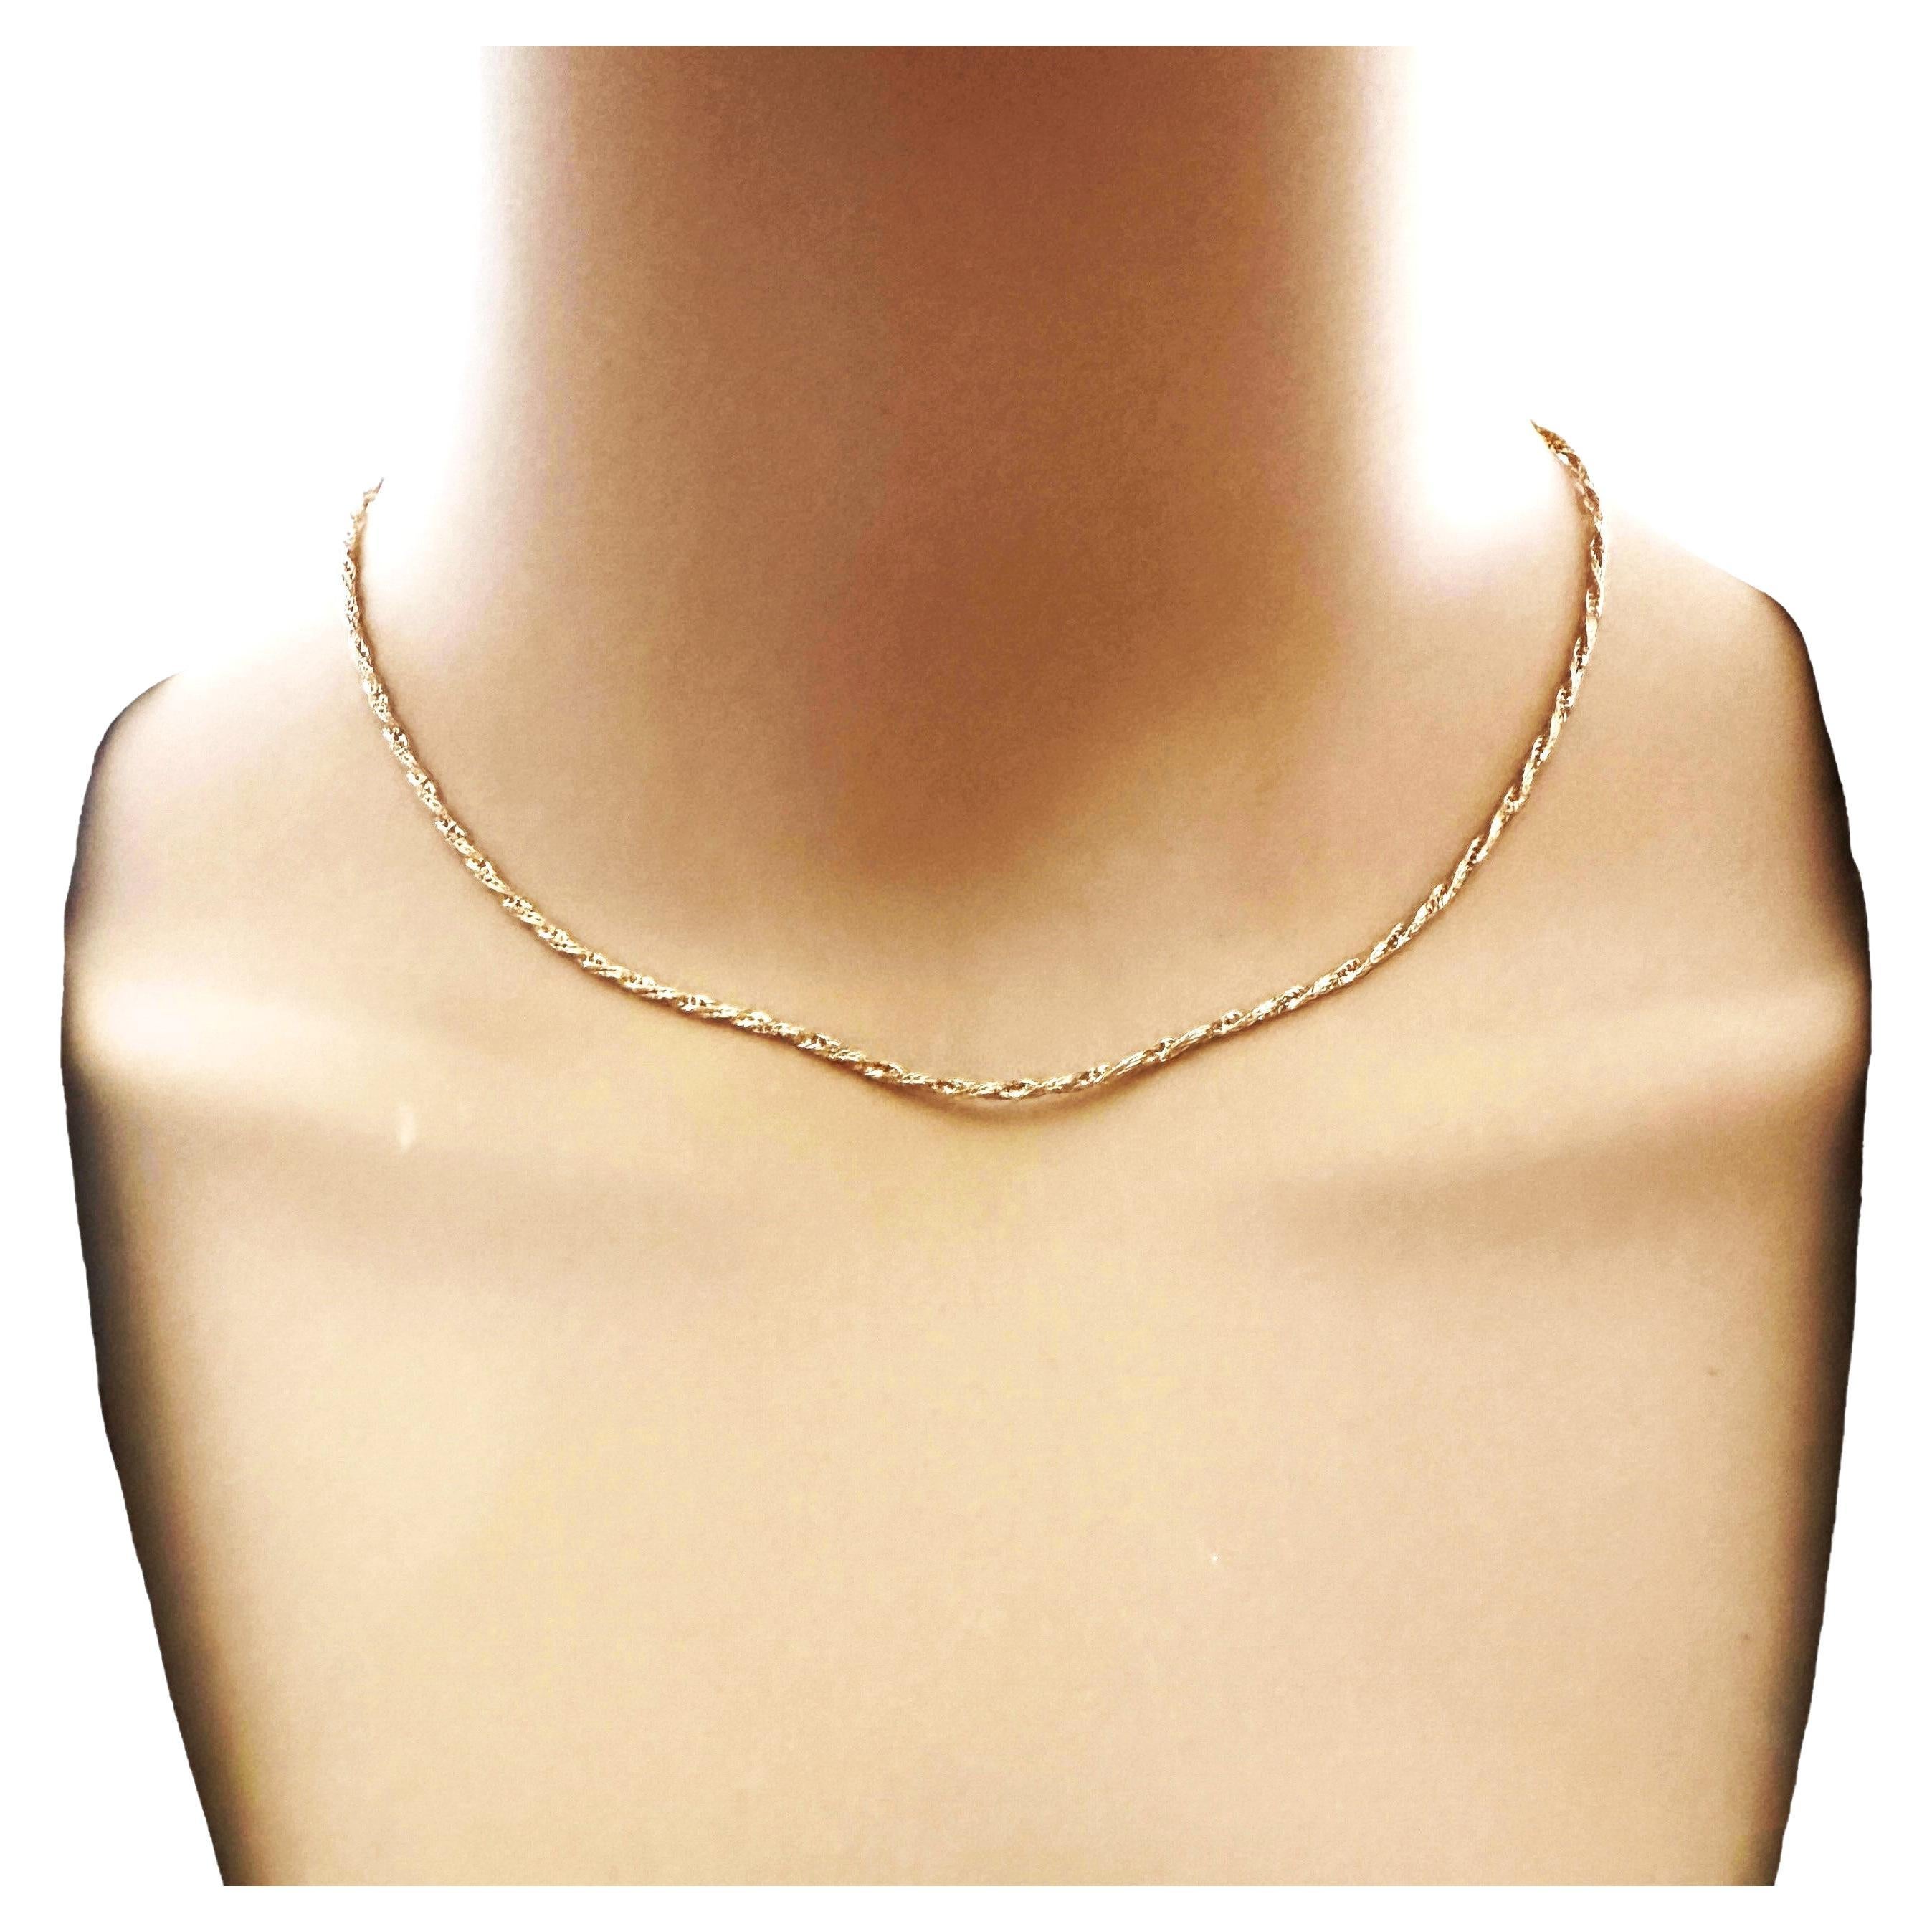 Mestige Gabriella Earrings & Necklace Set w/ Swarovski® Crystals - Rose  Gold | M.catch.com.au